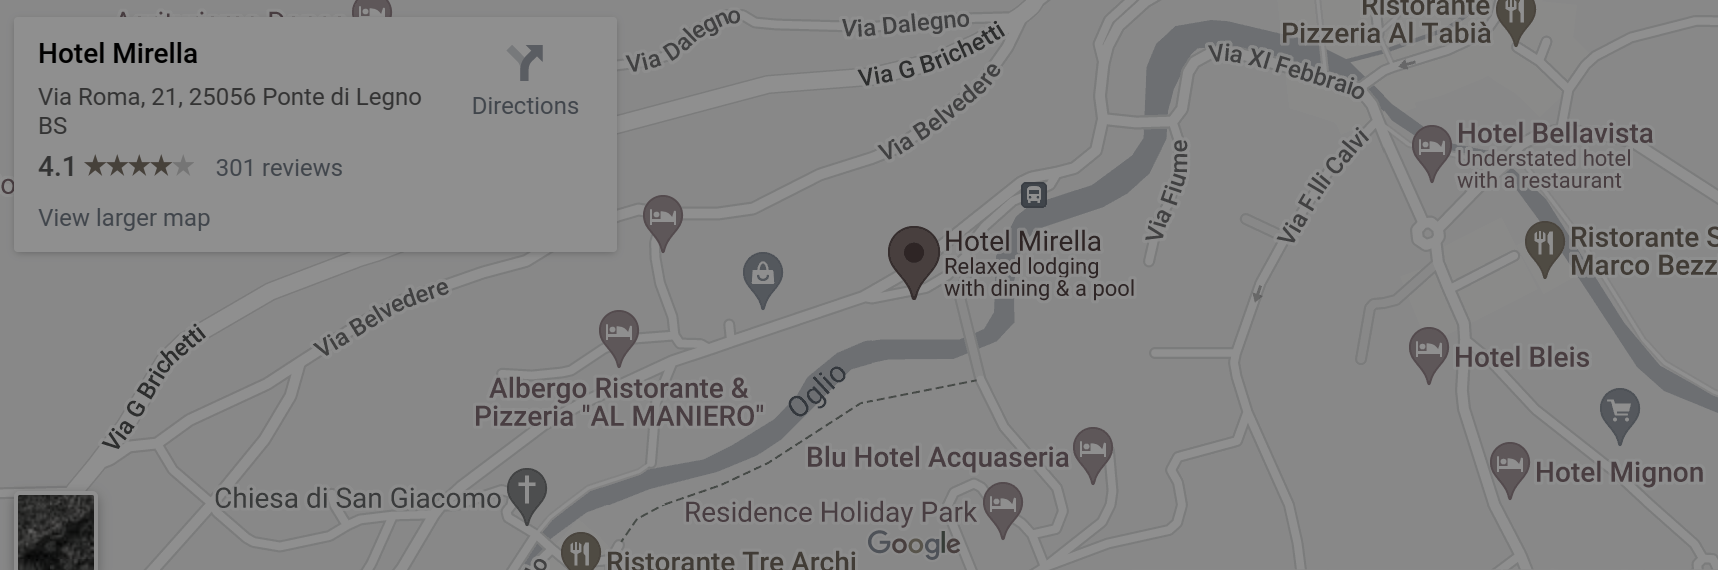 Hotel Mirella on Google Map